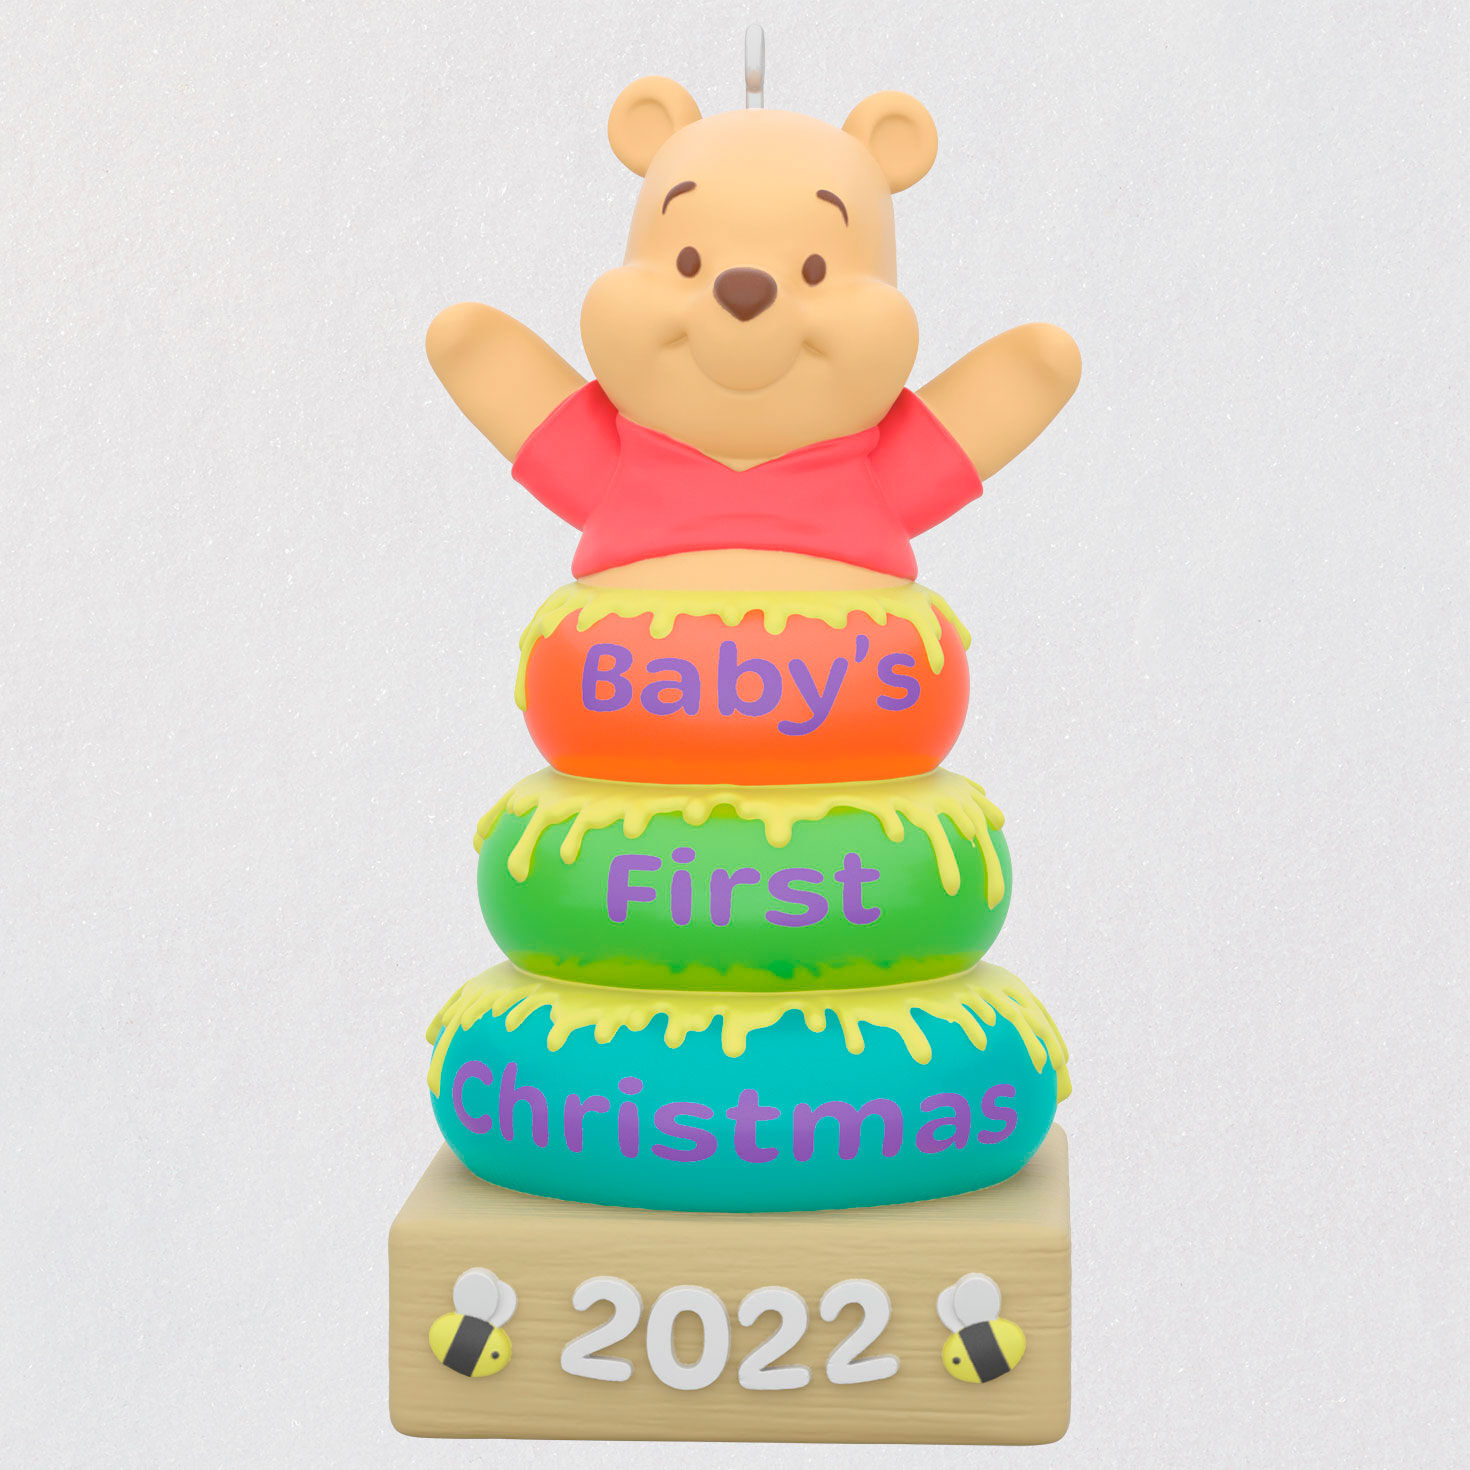 Christening Birth Keepsakes & Money Box Winnie The Pooh Baby Gifts by Hallmark 